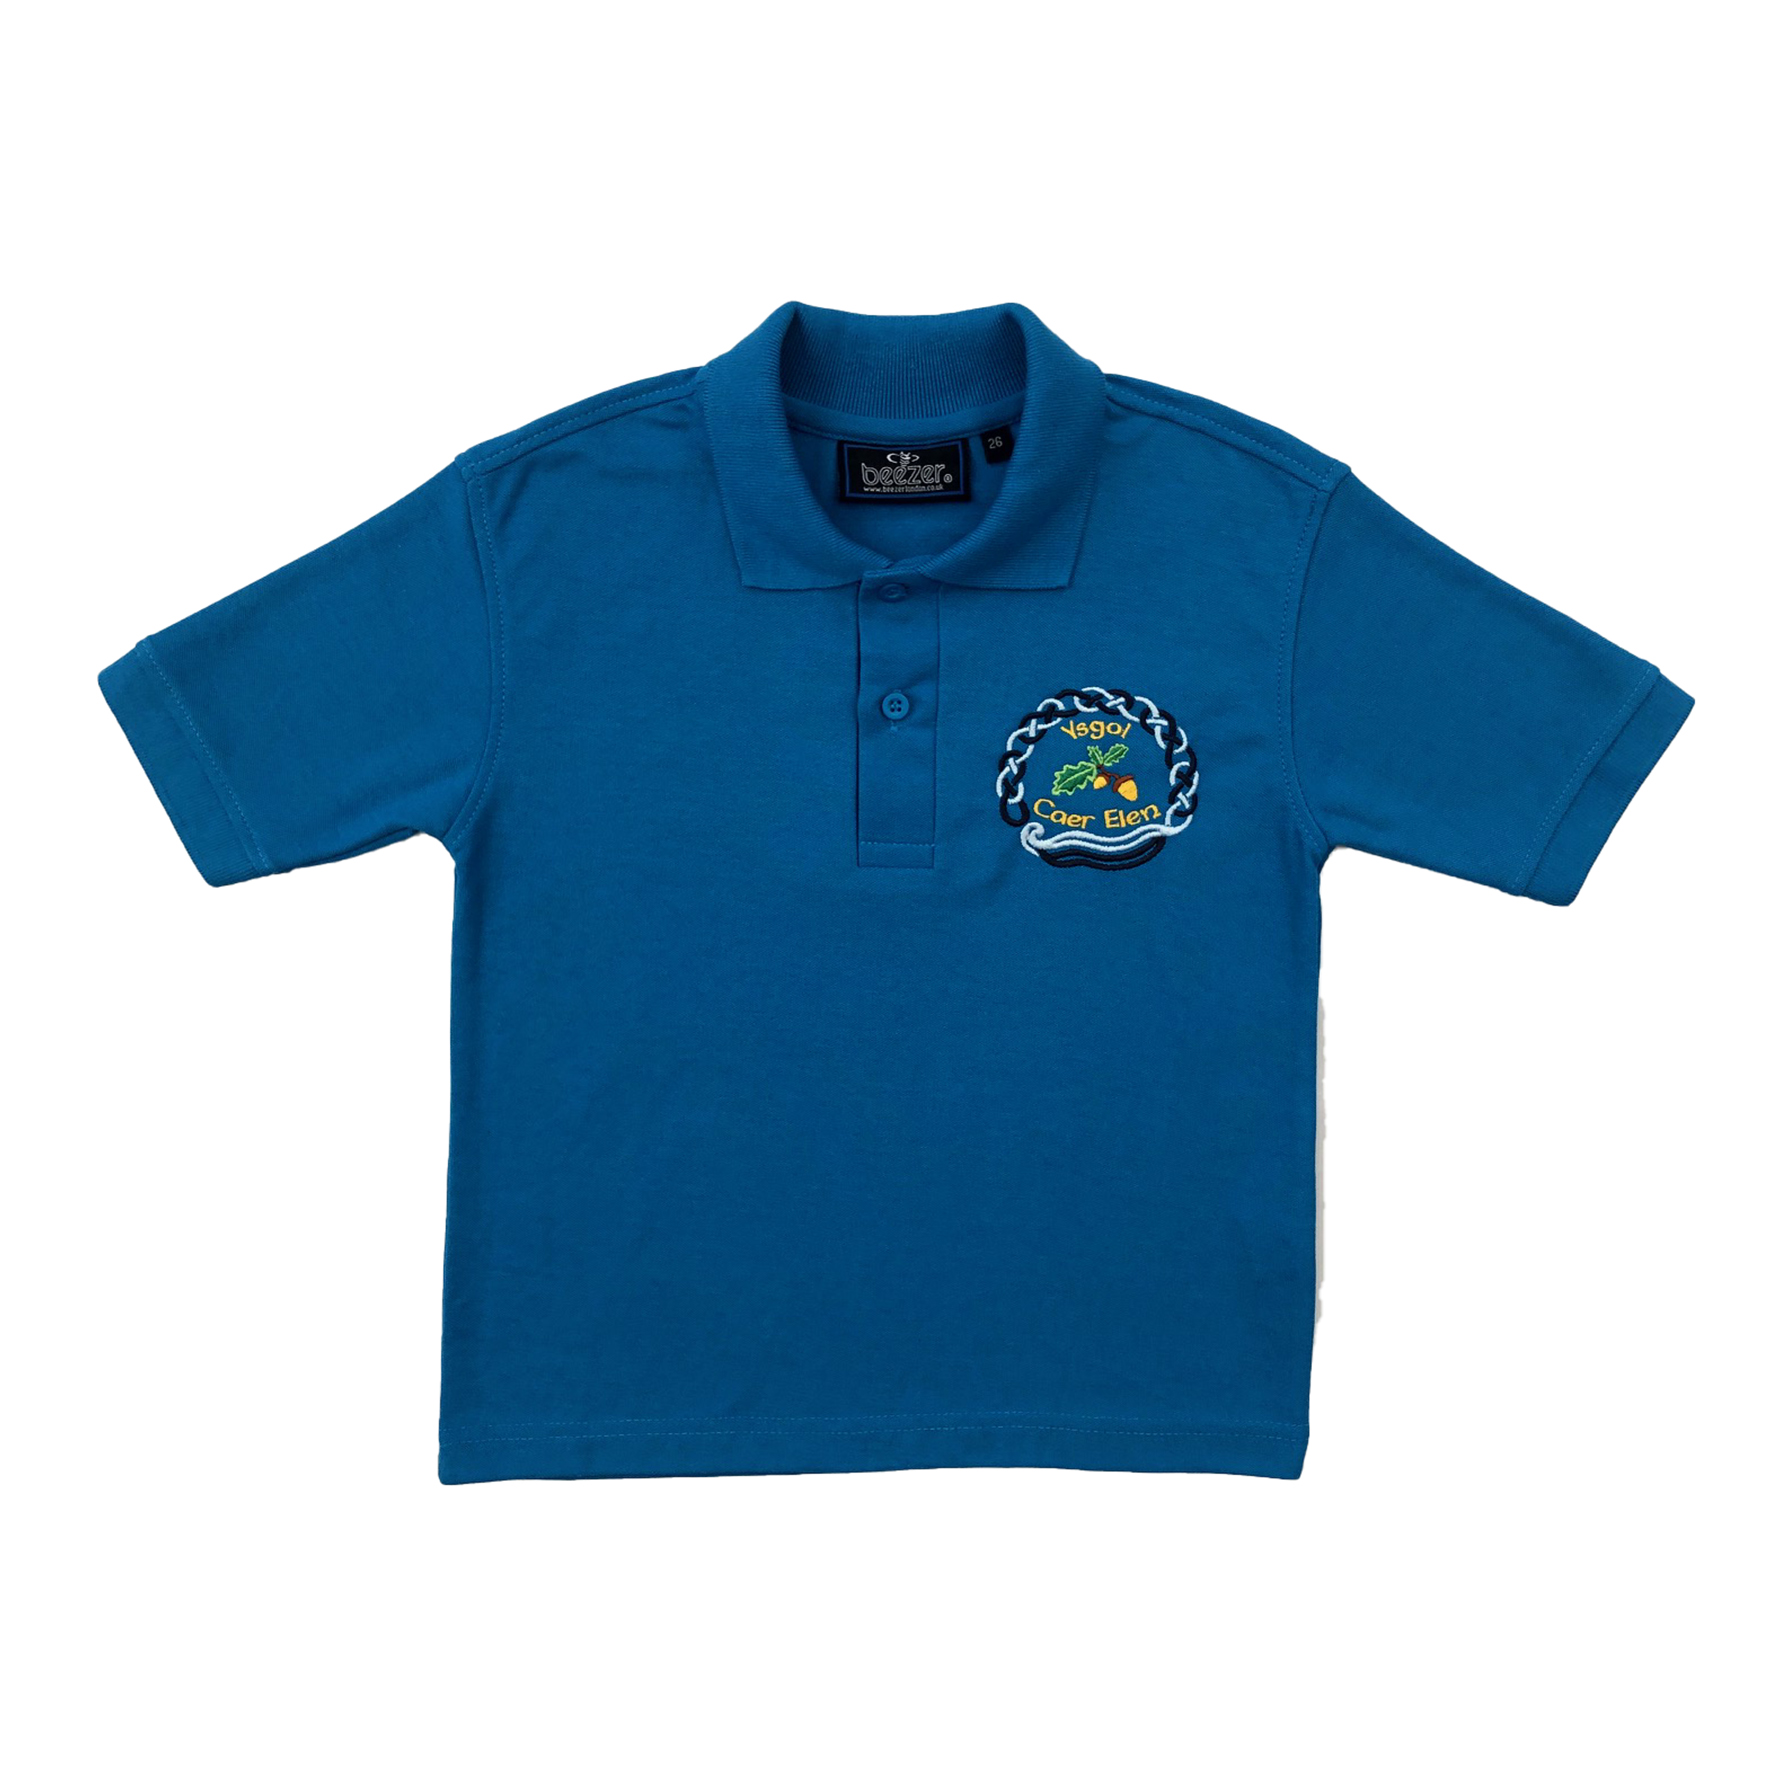 Ysgol Caer Elen Sapphire Polo Shirt - Tees R Us Embroidery and Print